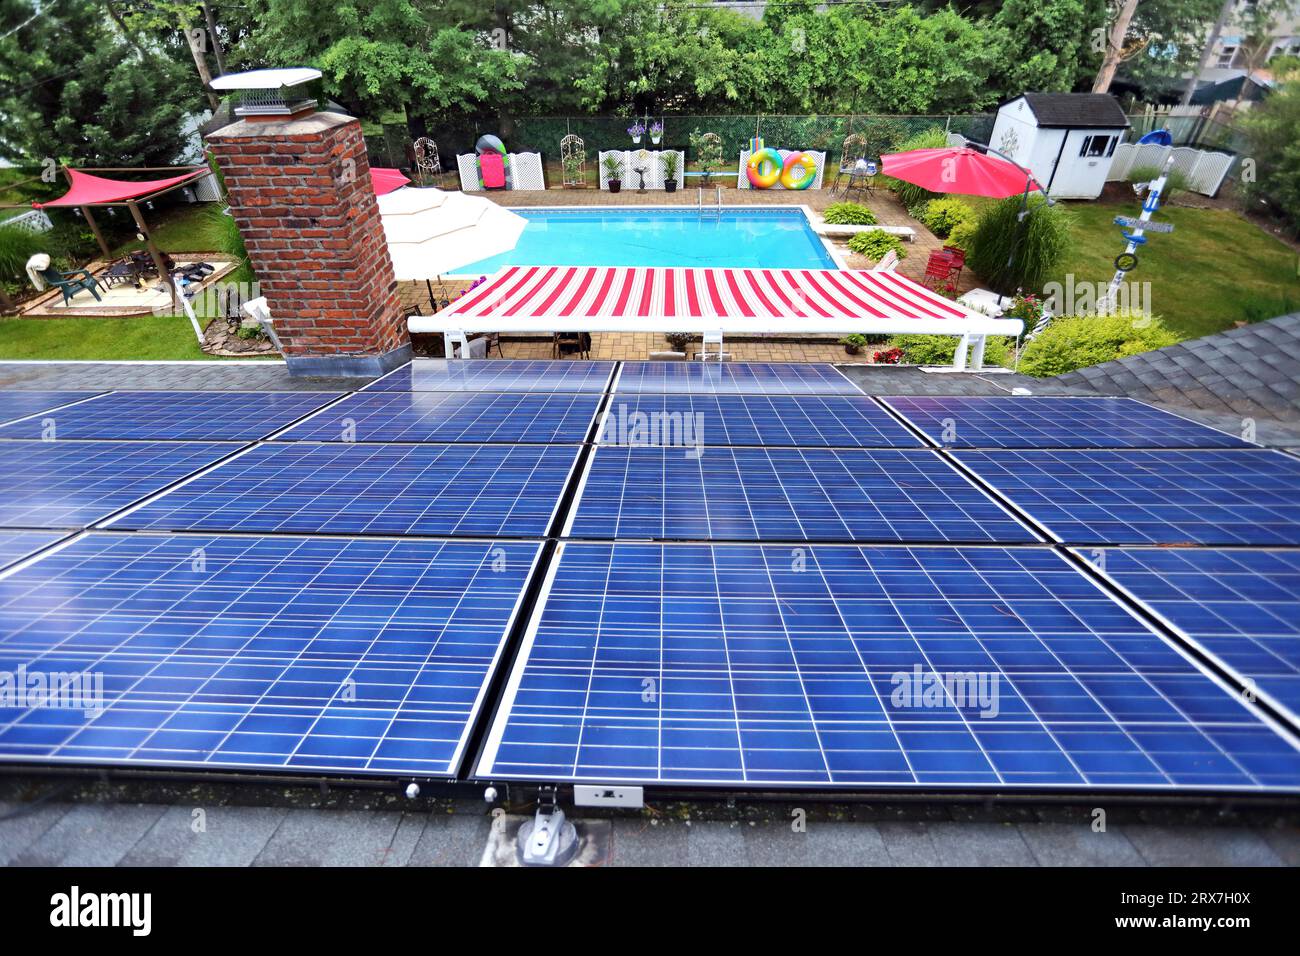 Backyard inground pool and patio and rooftop solar panels, Long Island, NY Stock Photo